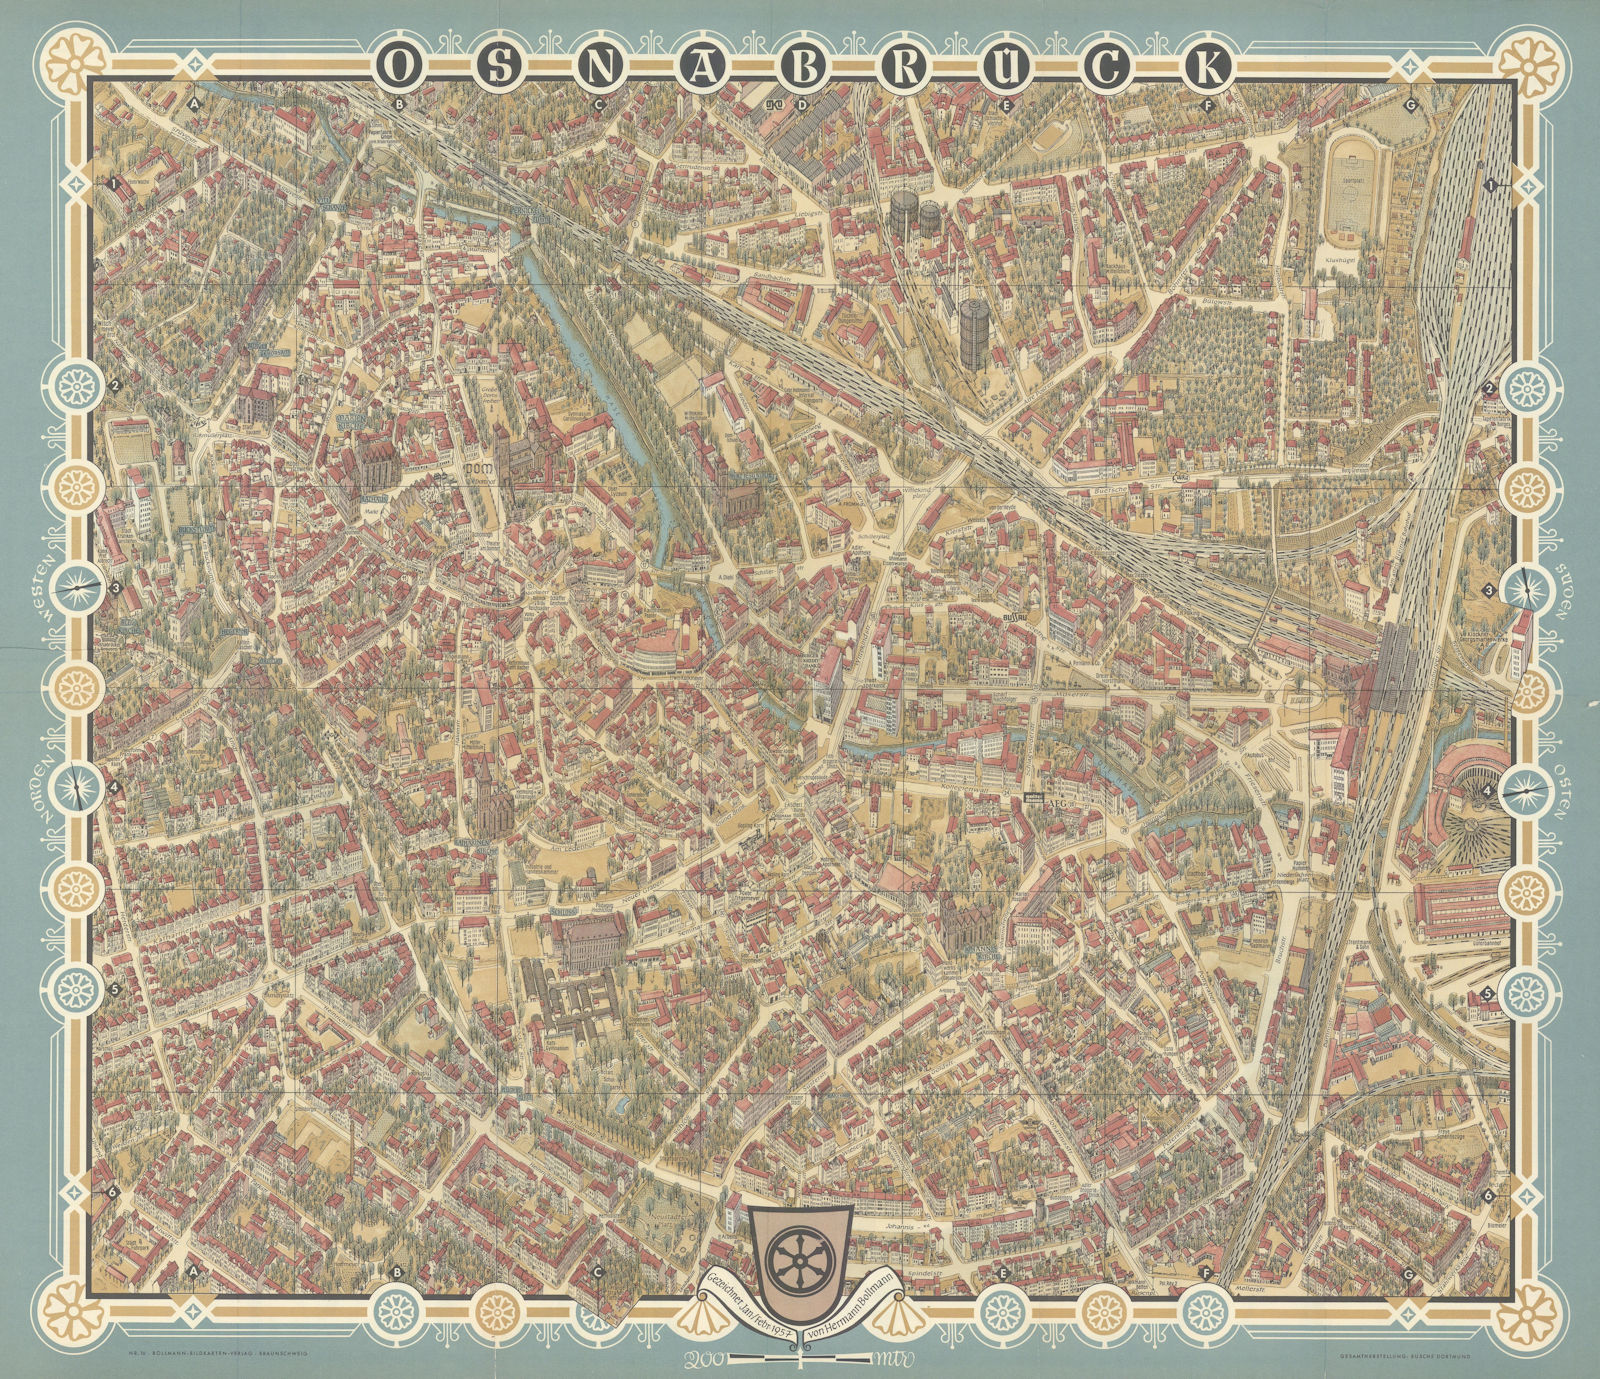 Osnabrück pictorial bird's eye view city plan #16 by Hermann Bollmann 1957 map